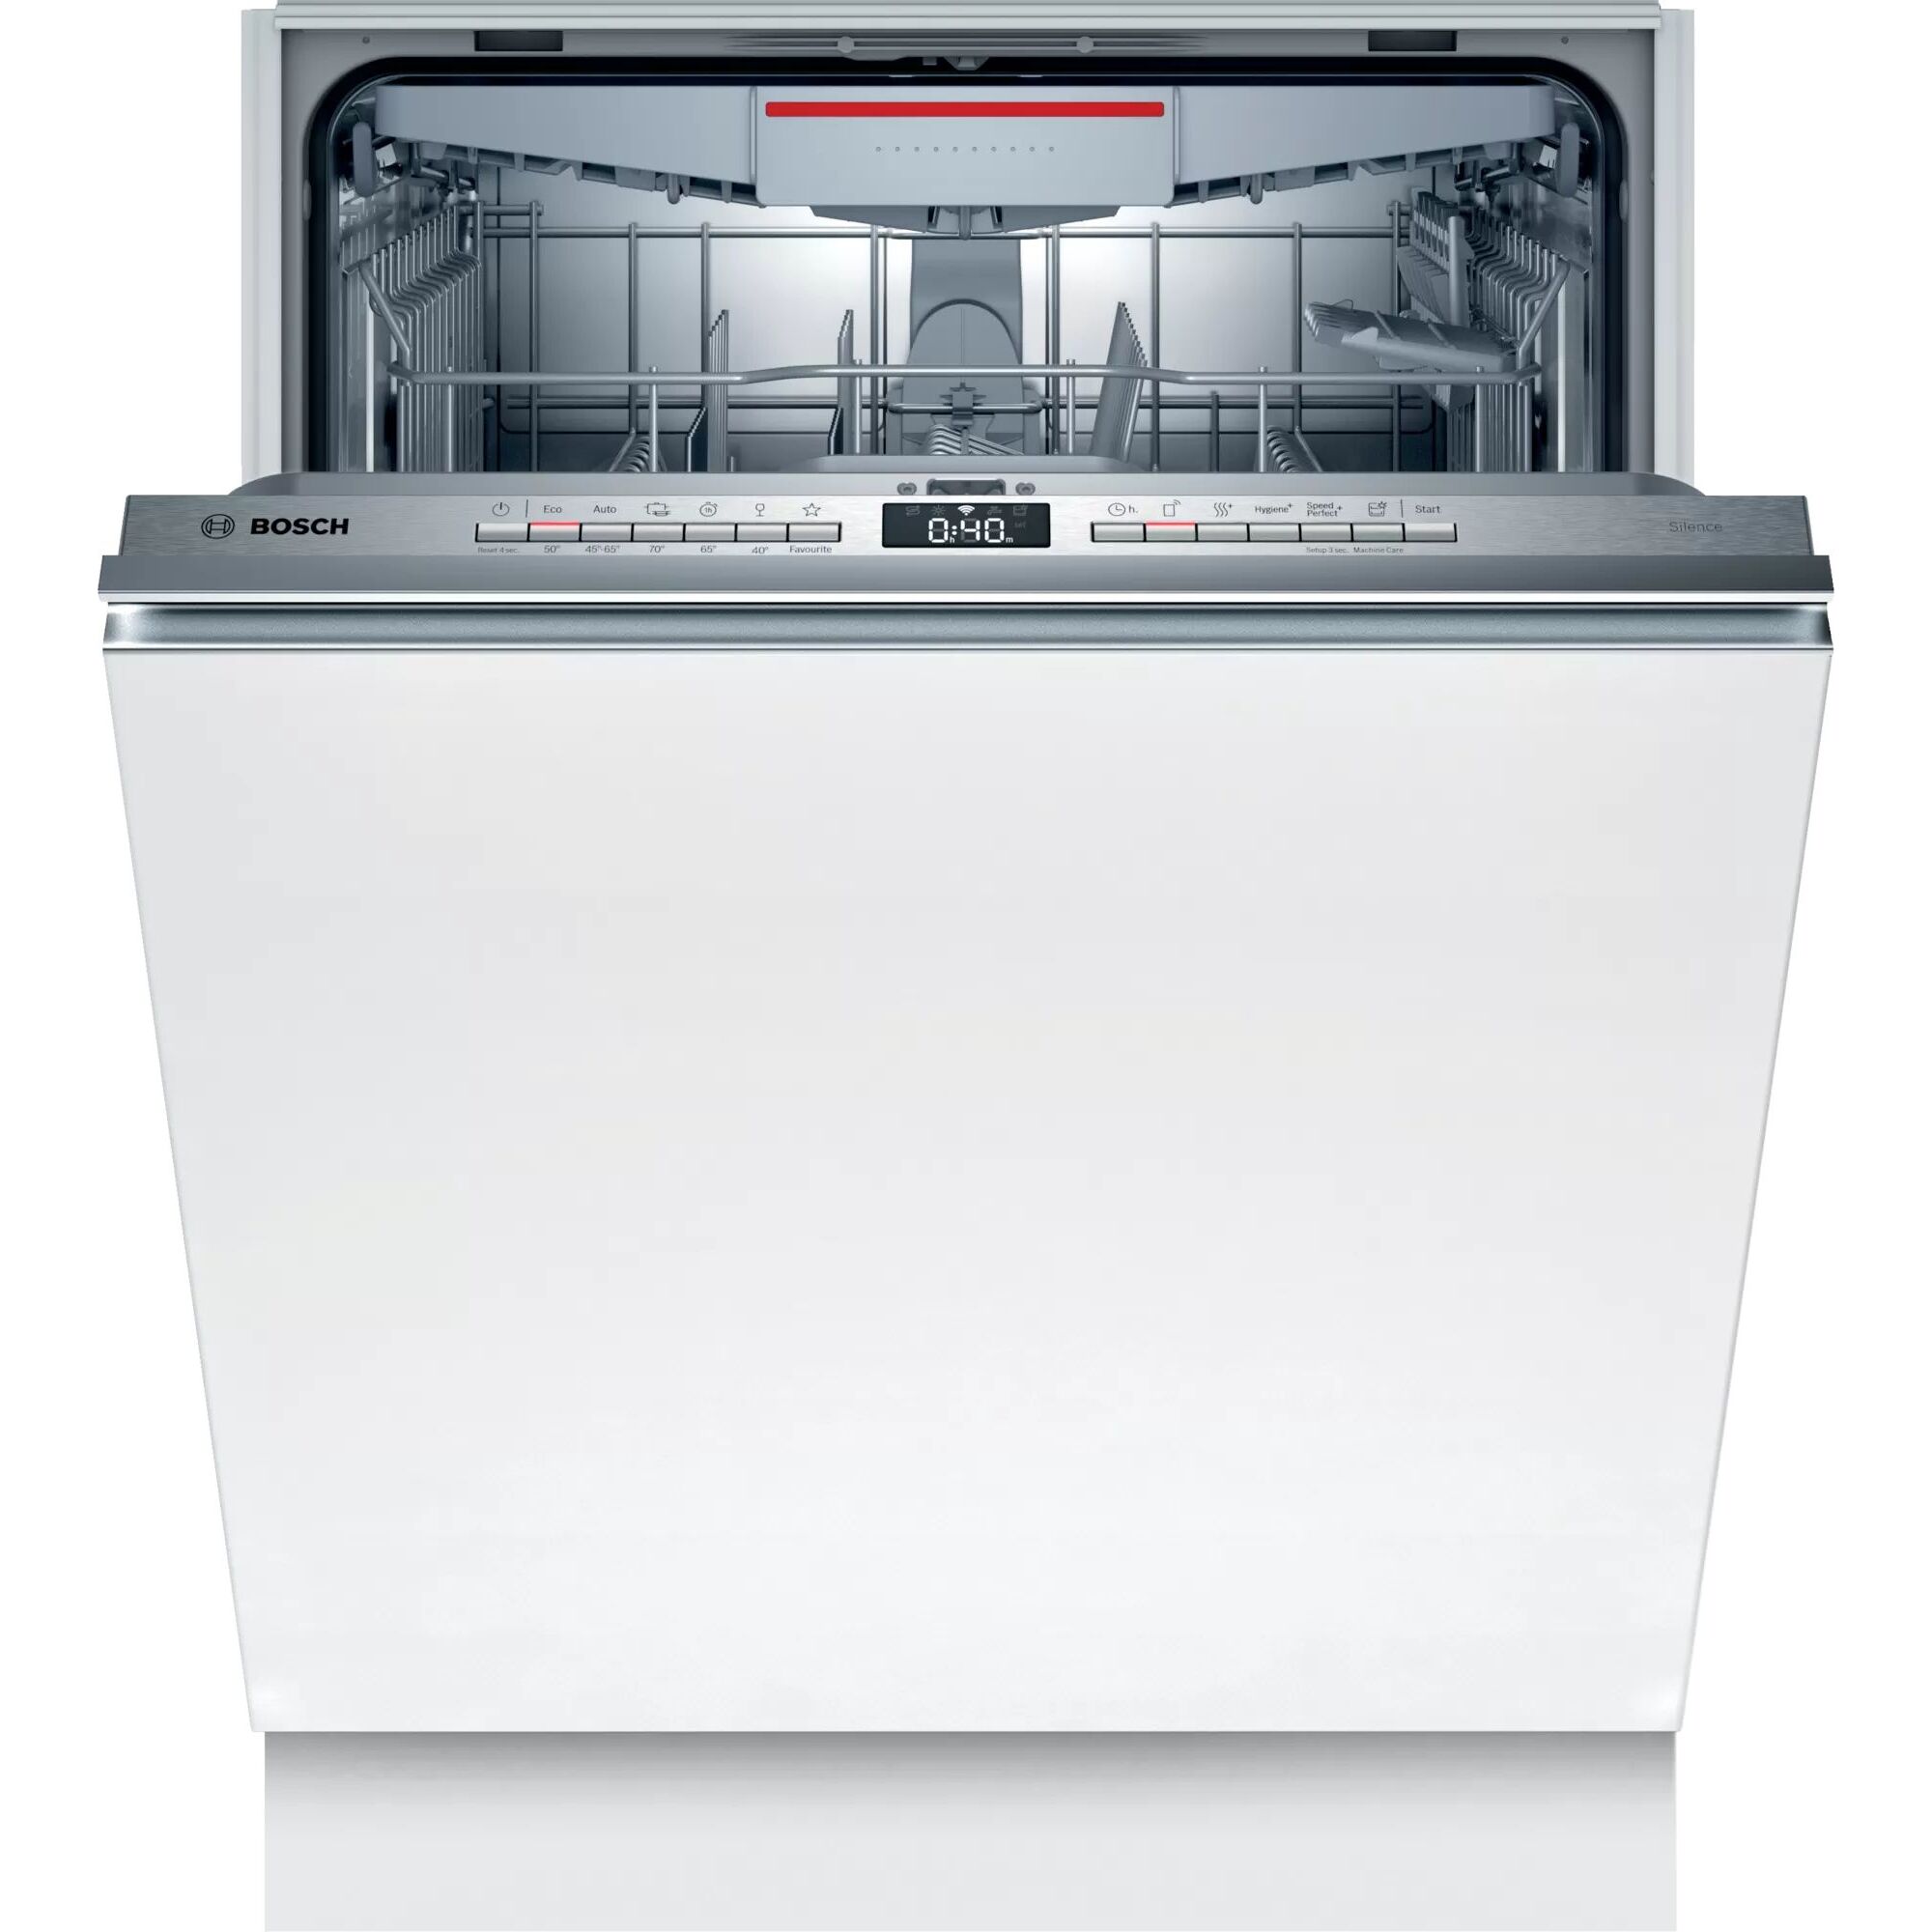 Встраиваемая посудомоечная машина Bosch SMV4HVX32E посудомоечная машина встраив bosch smv4hvx32e полноразмерная